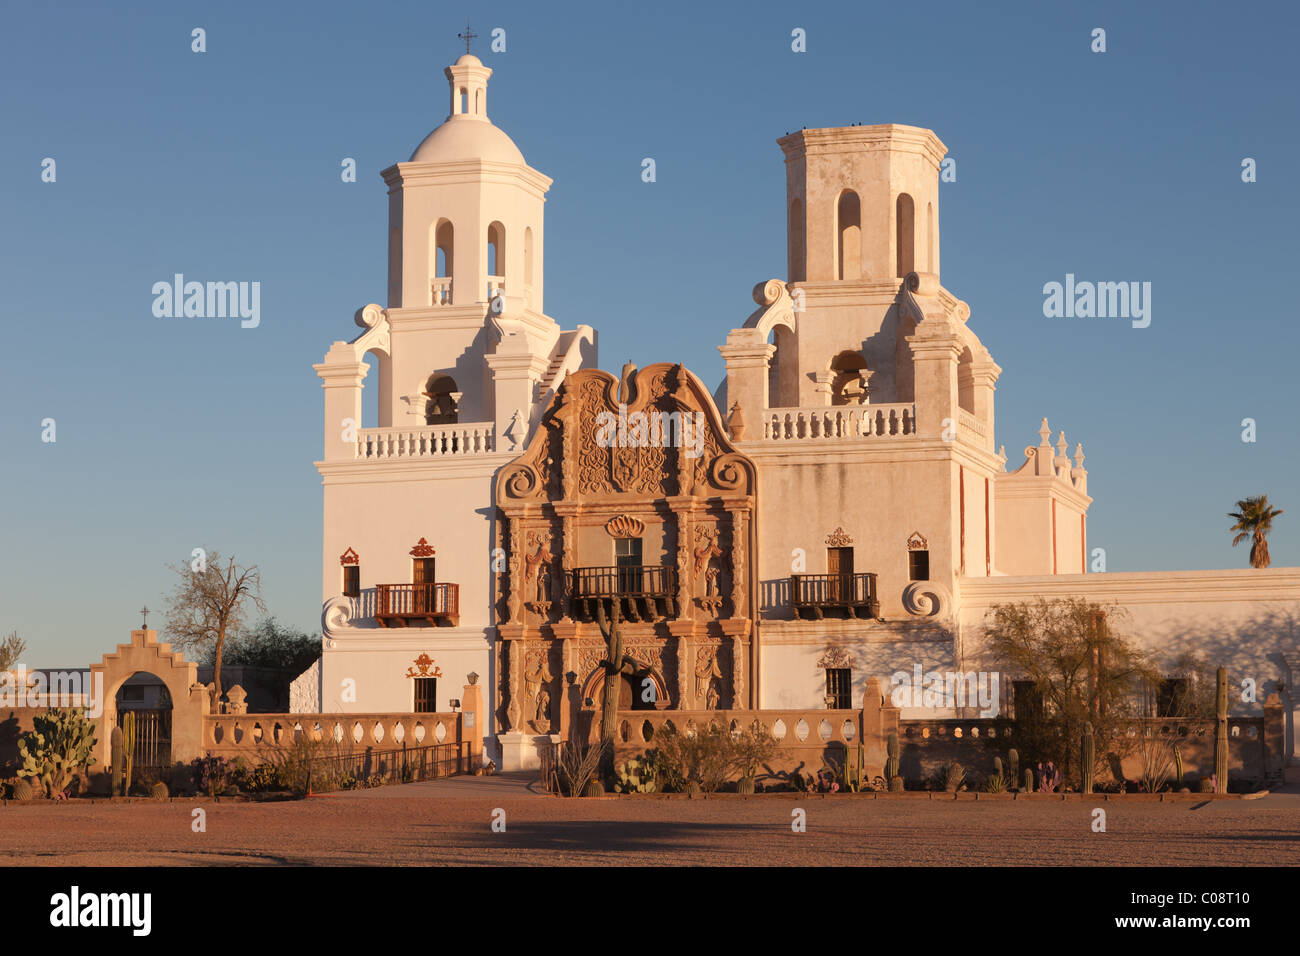 The historic moorish inspired San Xavier del Bac mission in the Santa Cruz Valley near Tucson, Arizona. Stock Photo